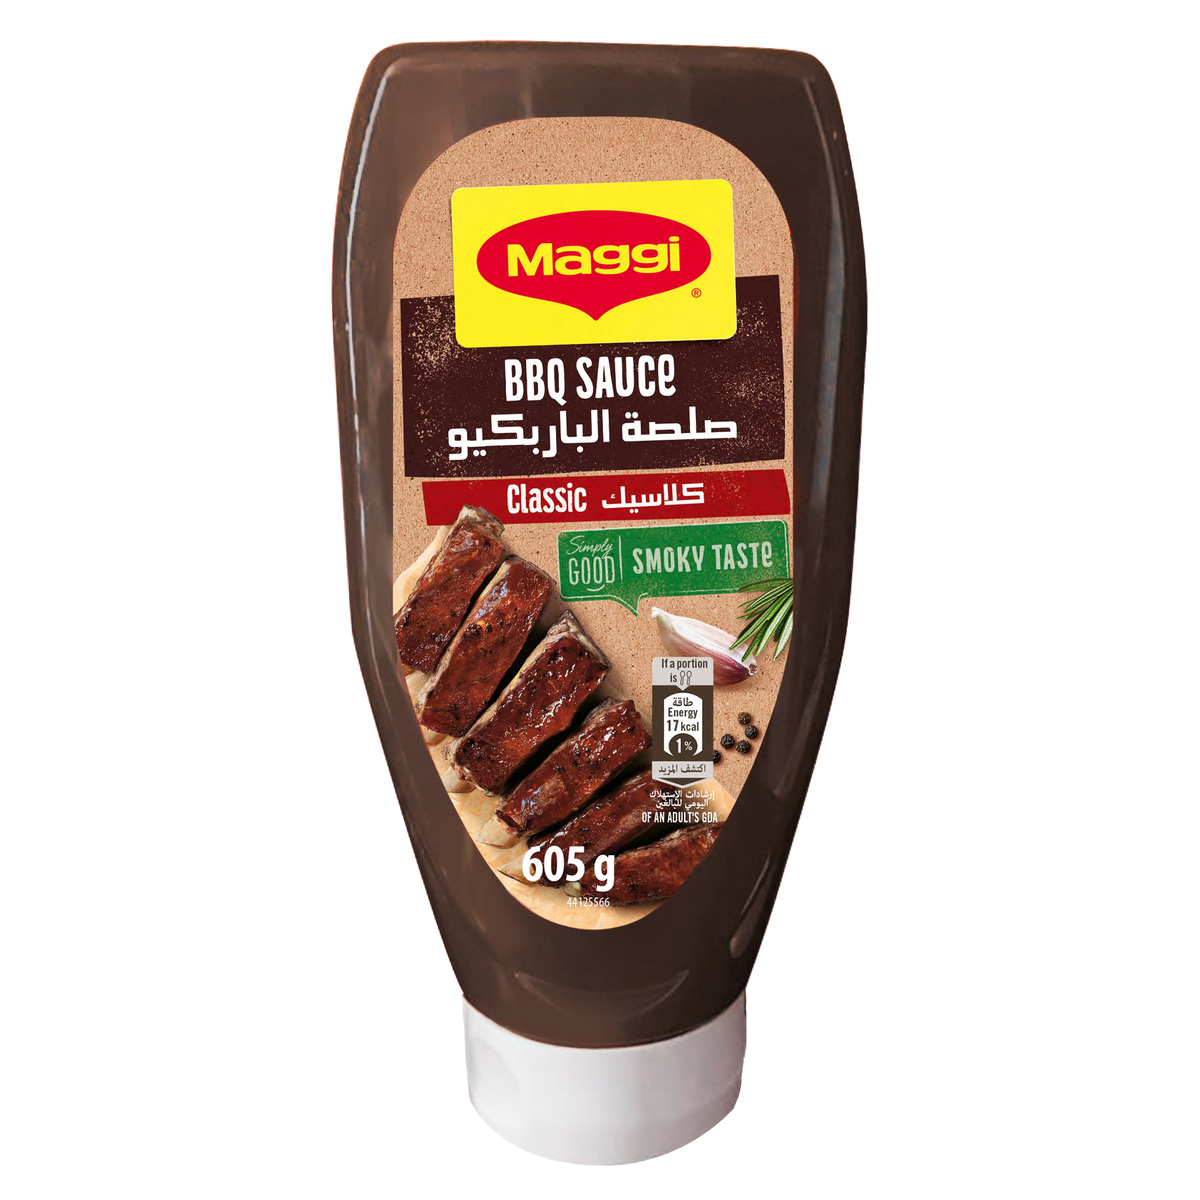 Maggi Barbeque Sauce 605g